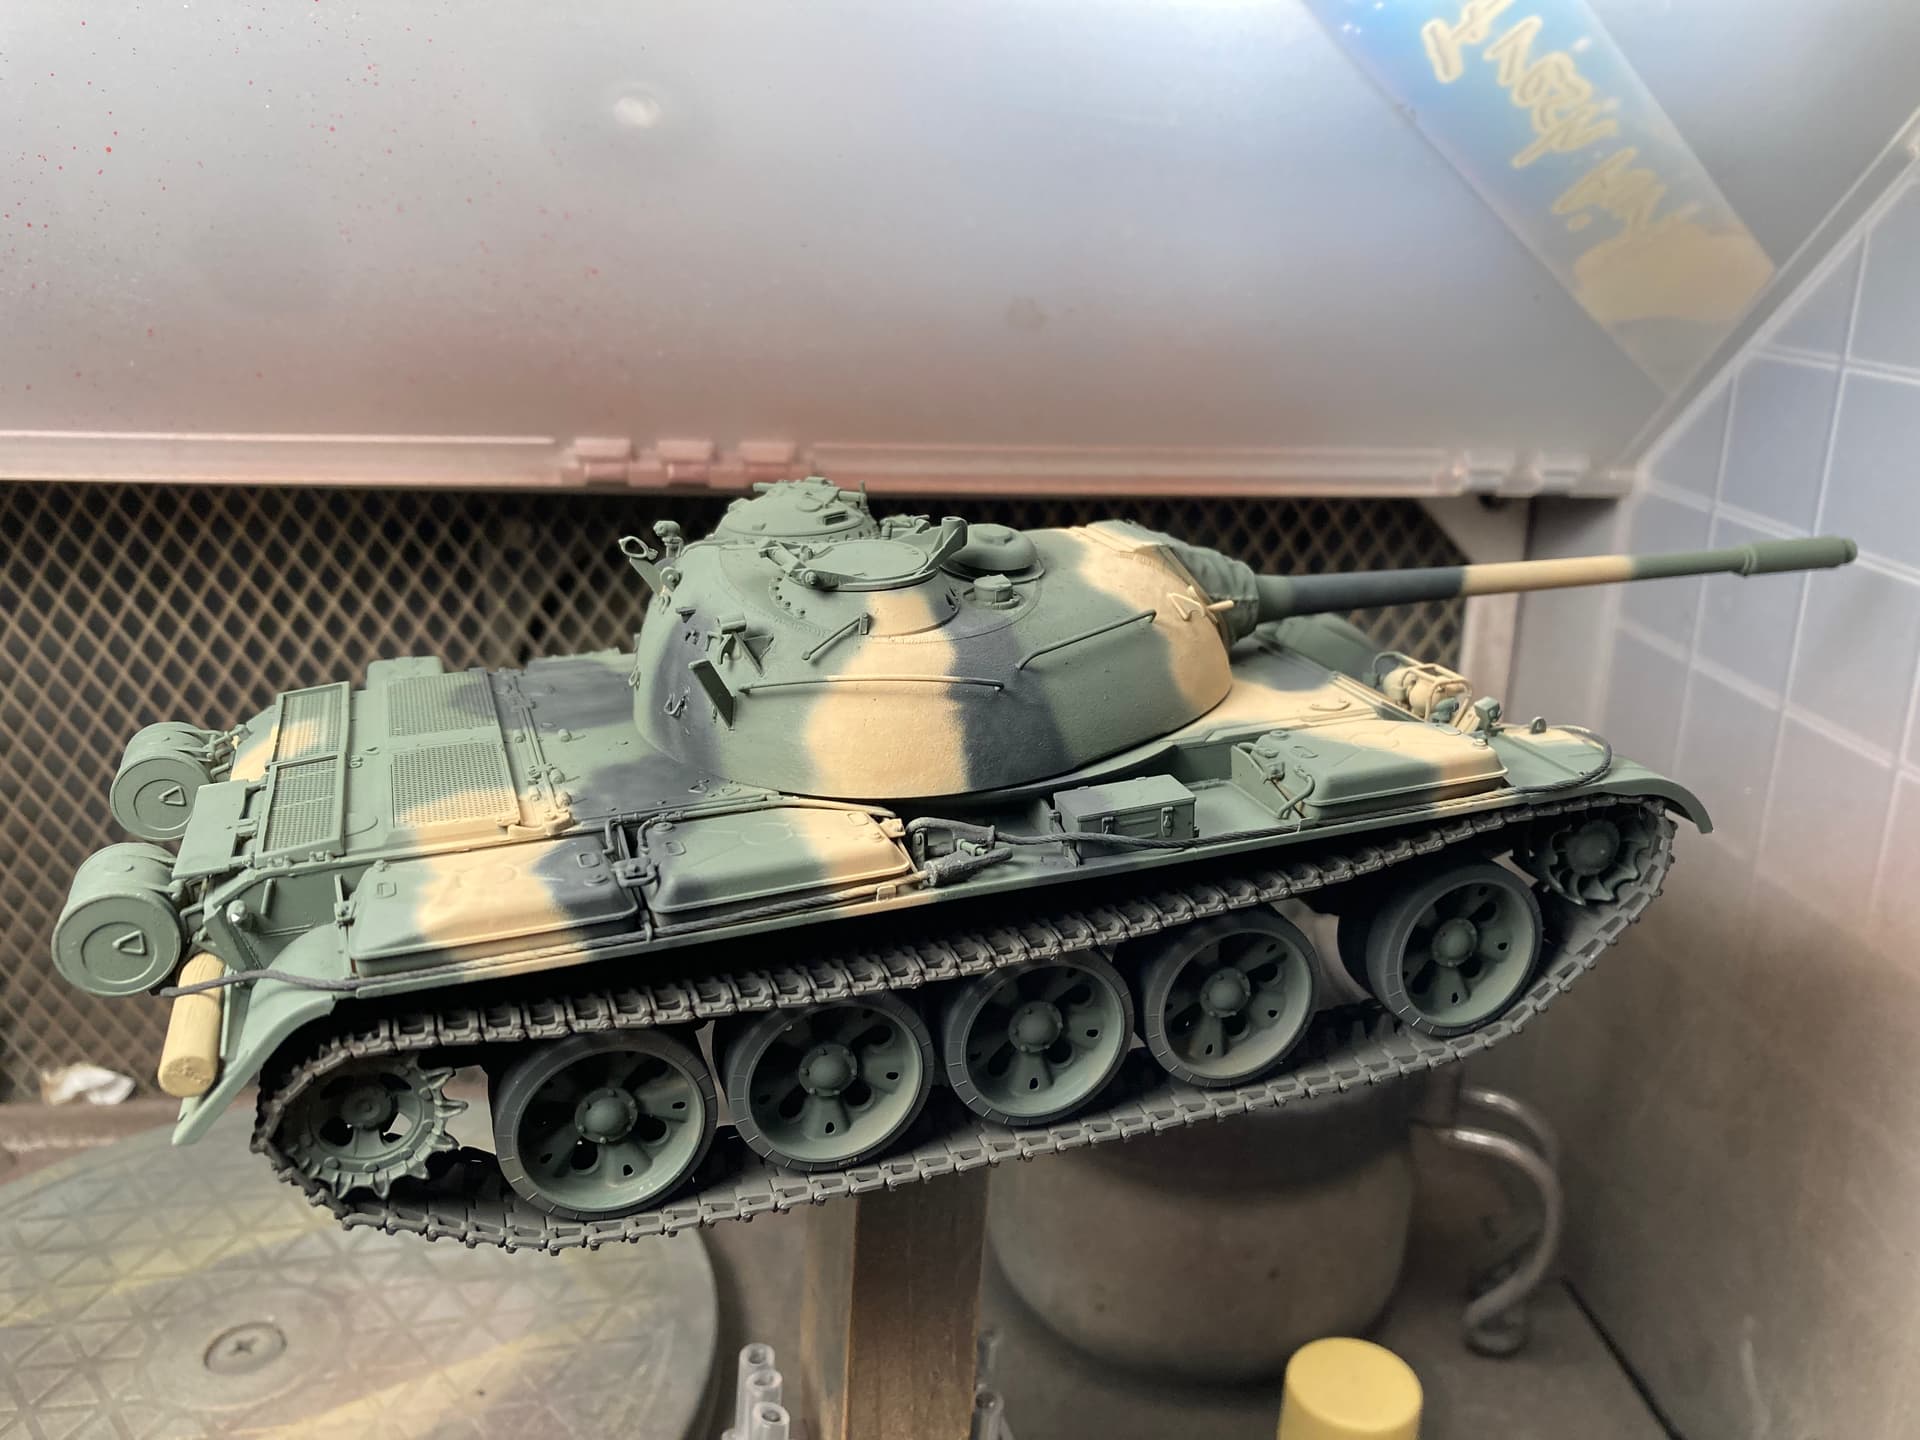 Build review of the HobbyBoss Type 59-1 medium tank scale model